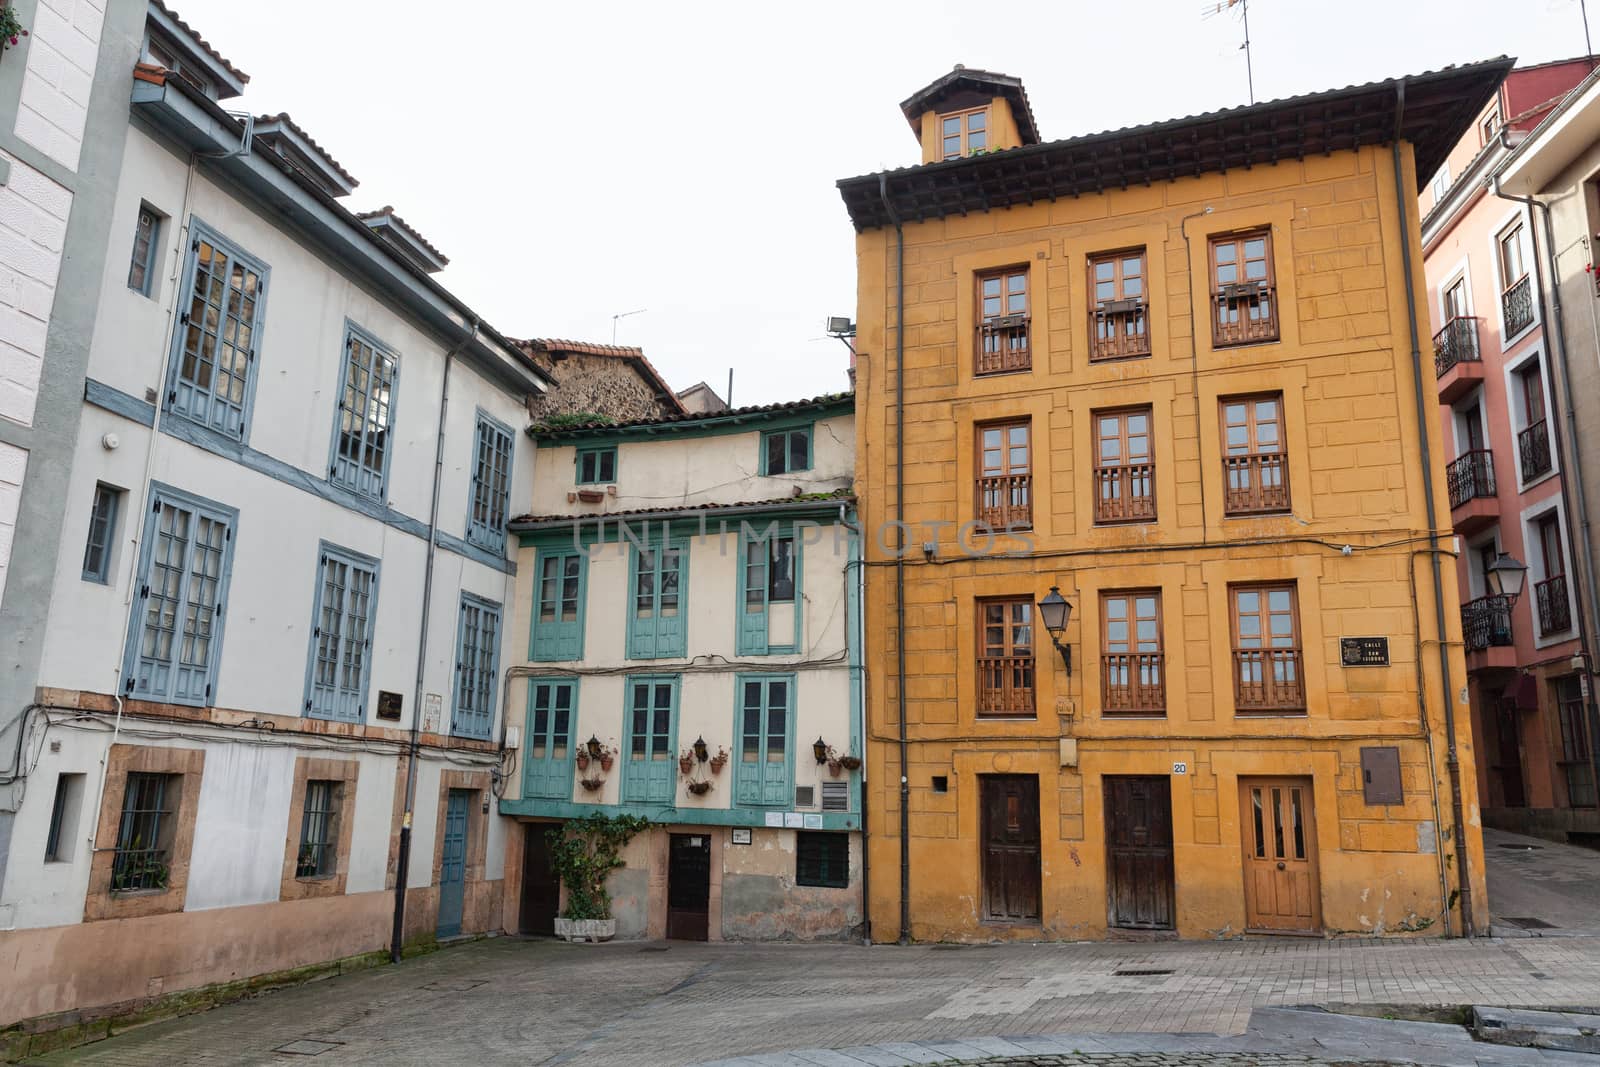 Oviedo, Spain - 11 December 2018: Plaza del Paraguas and San Isidoro street